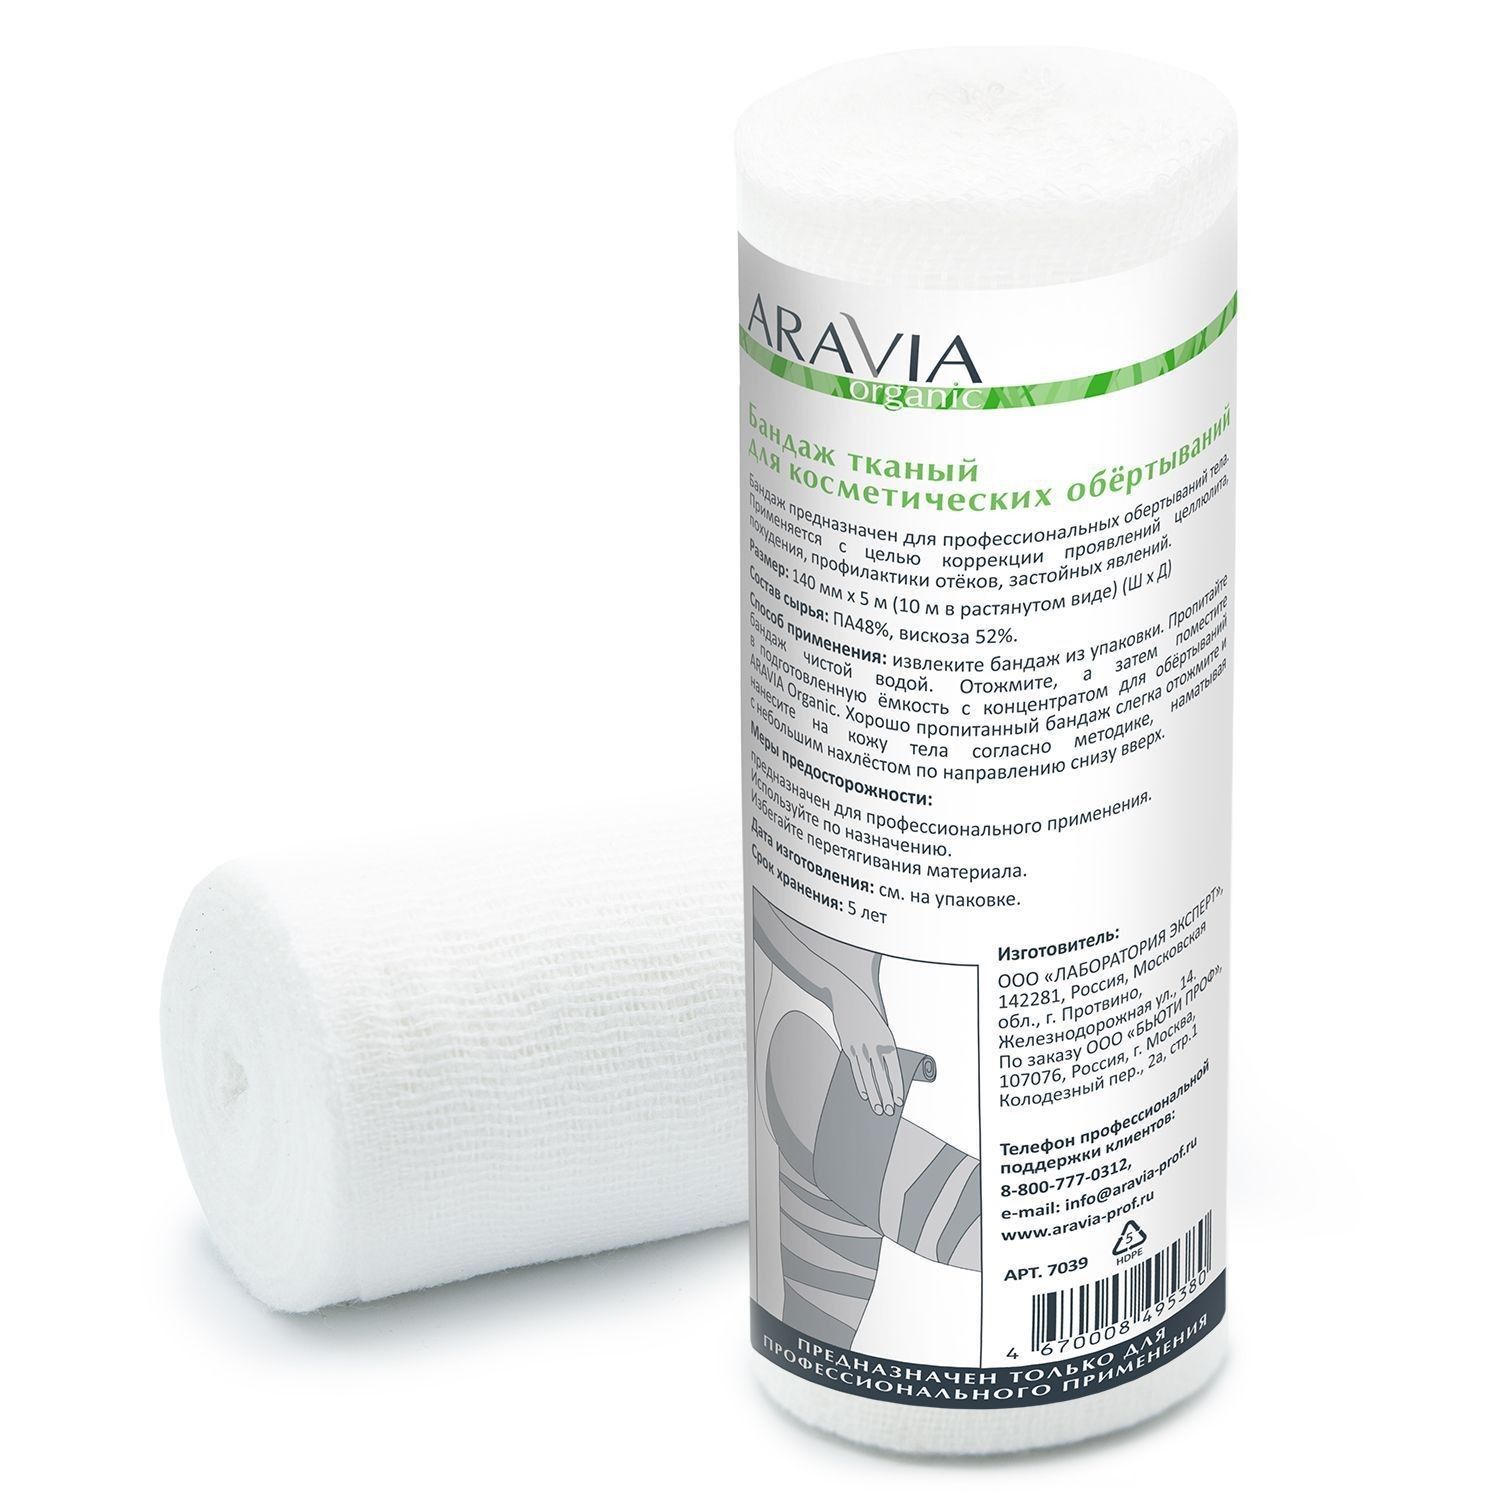 Бандаж для косметических обертываний Aravia Professional тканный 14 см x 10 м aravia professional organic бандаж тканный для косметических обертываний 14 см x 10 м